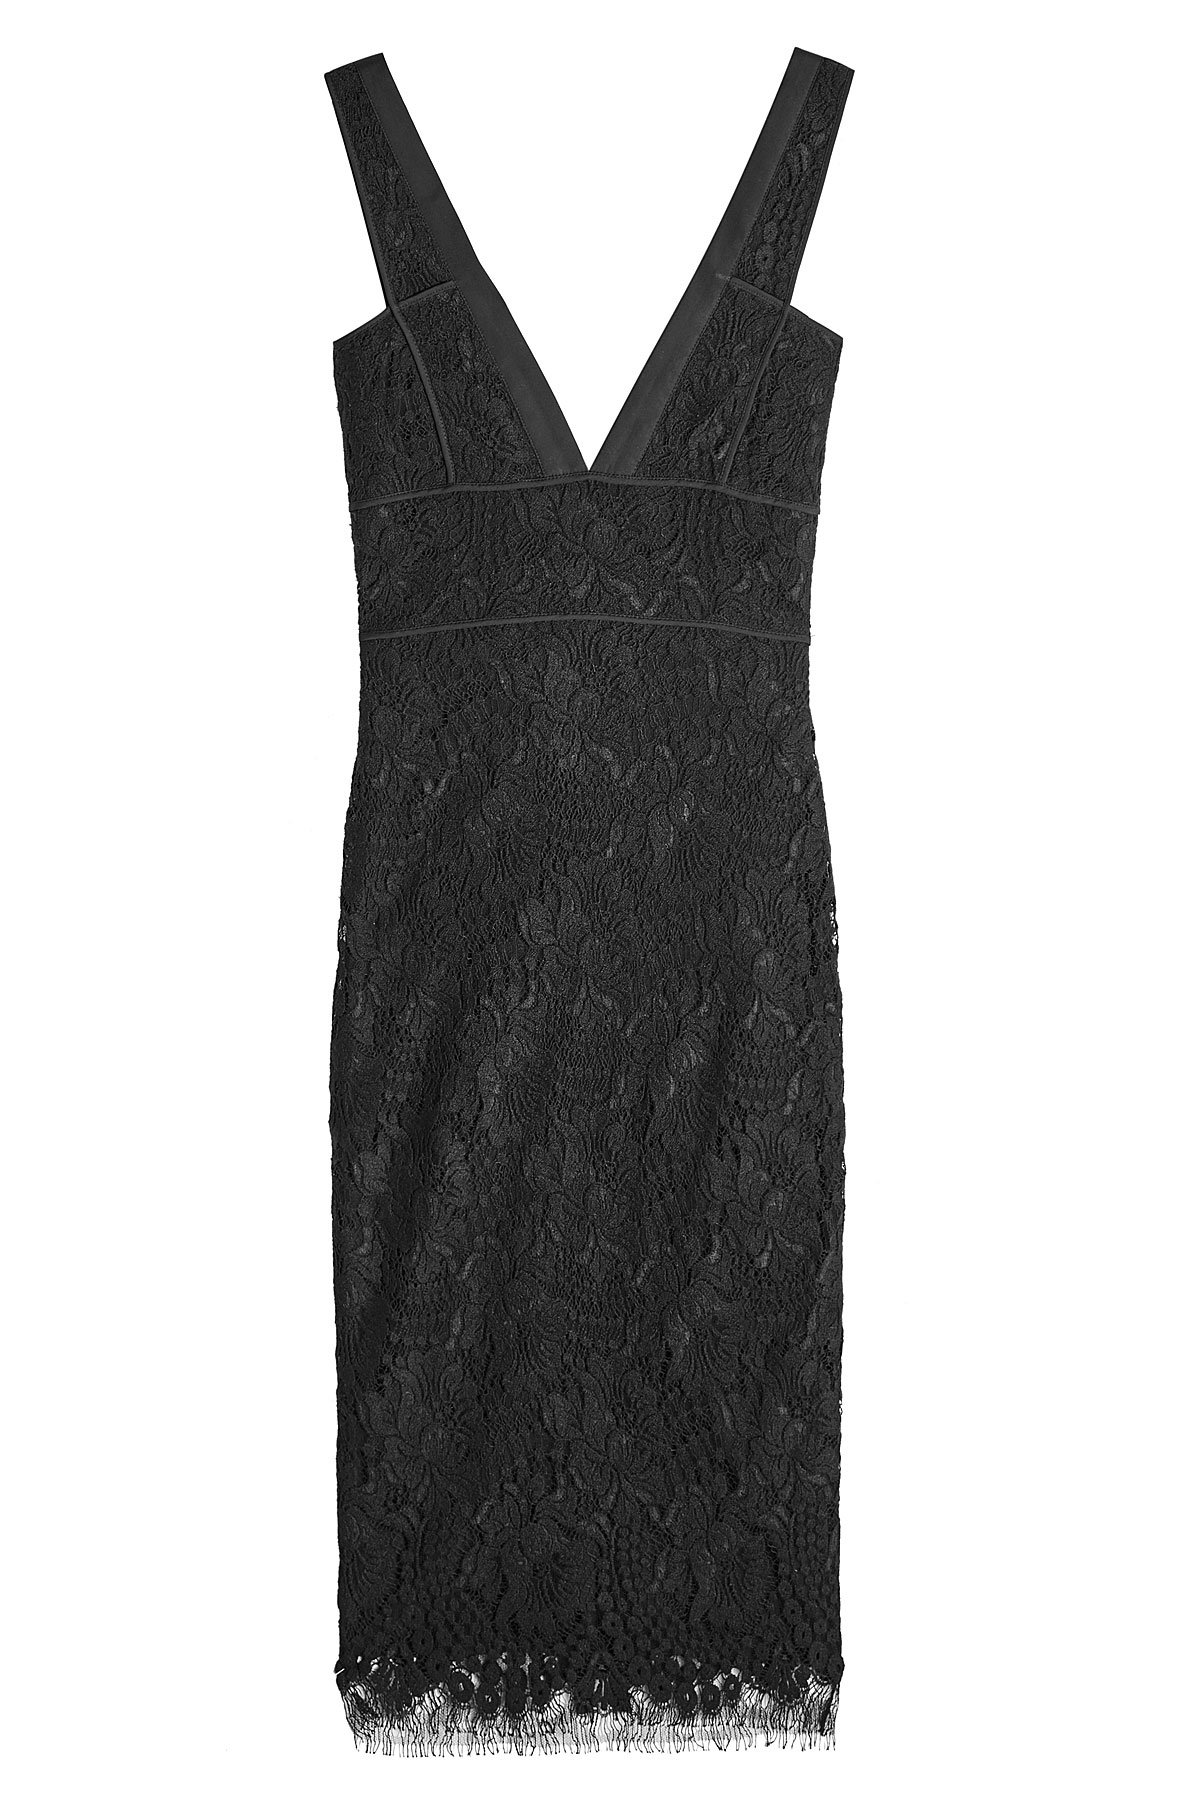 Victoria Beckham - Wool-Silk Embroidered Dress